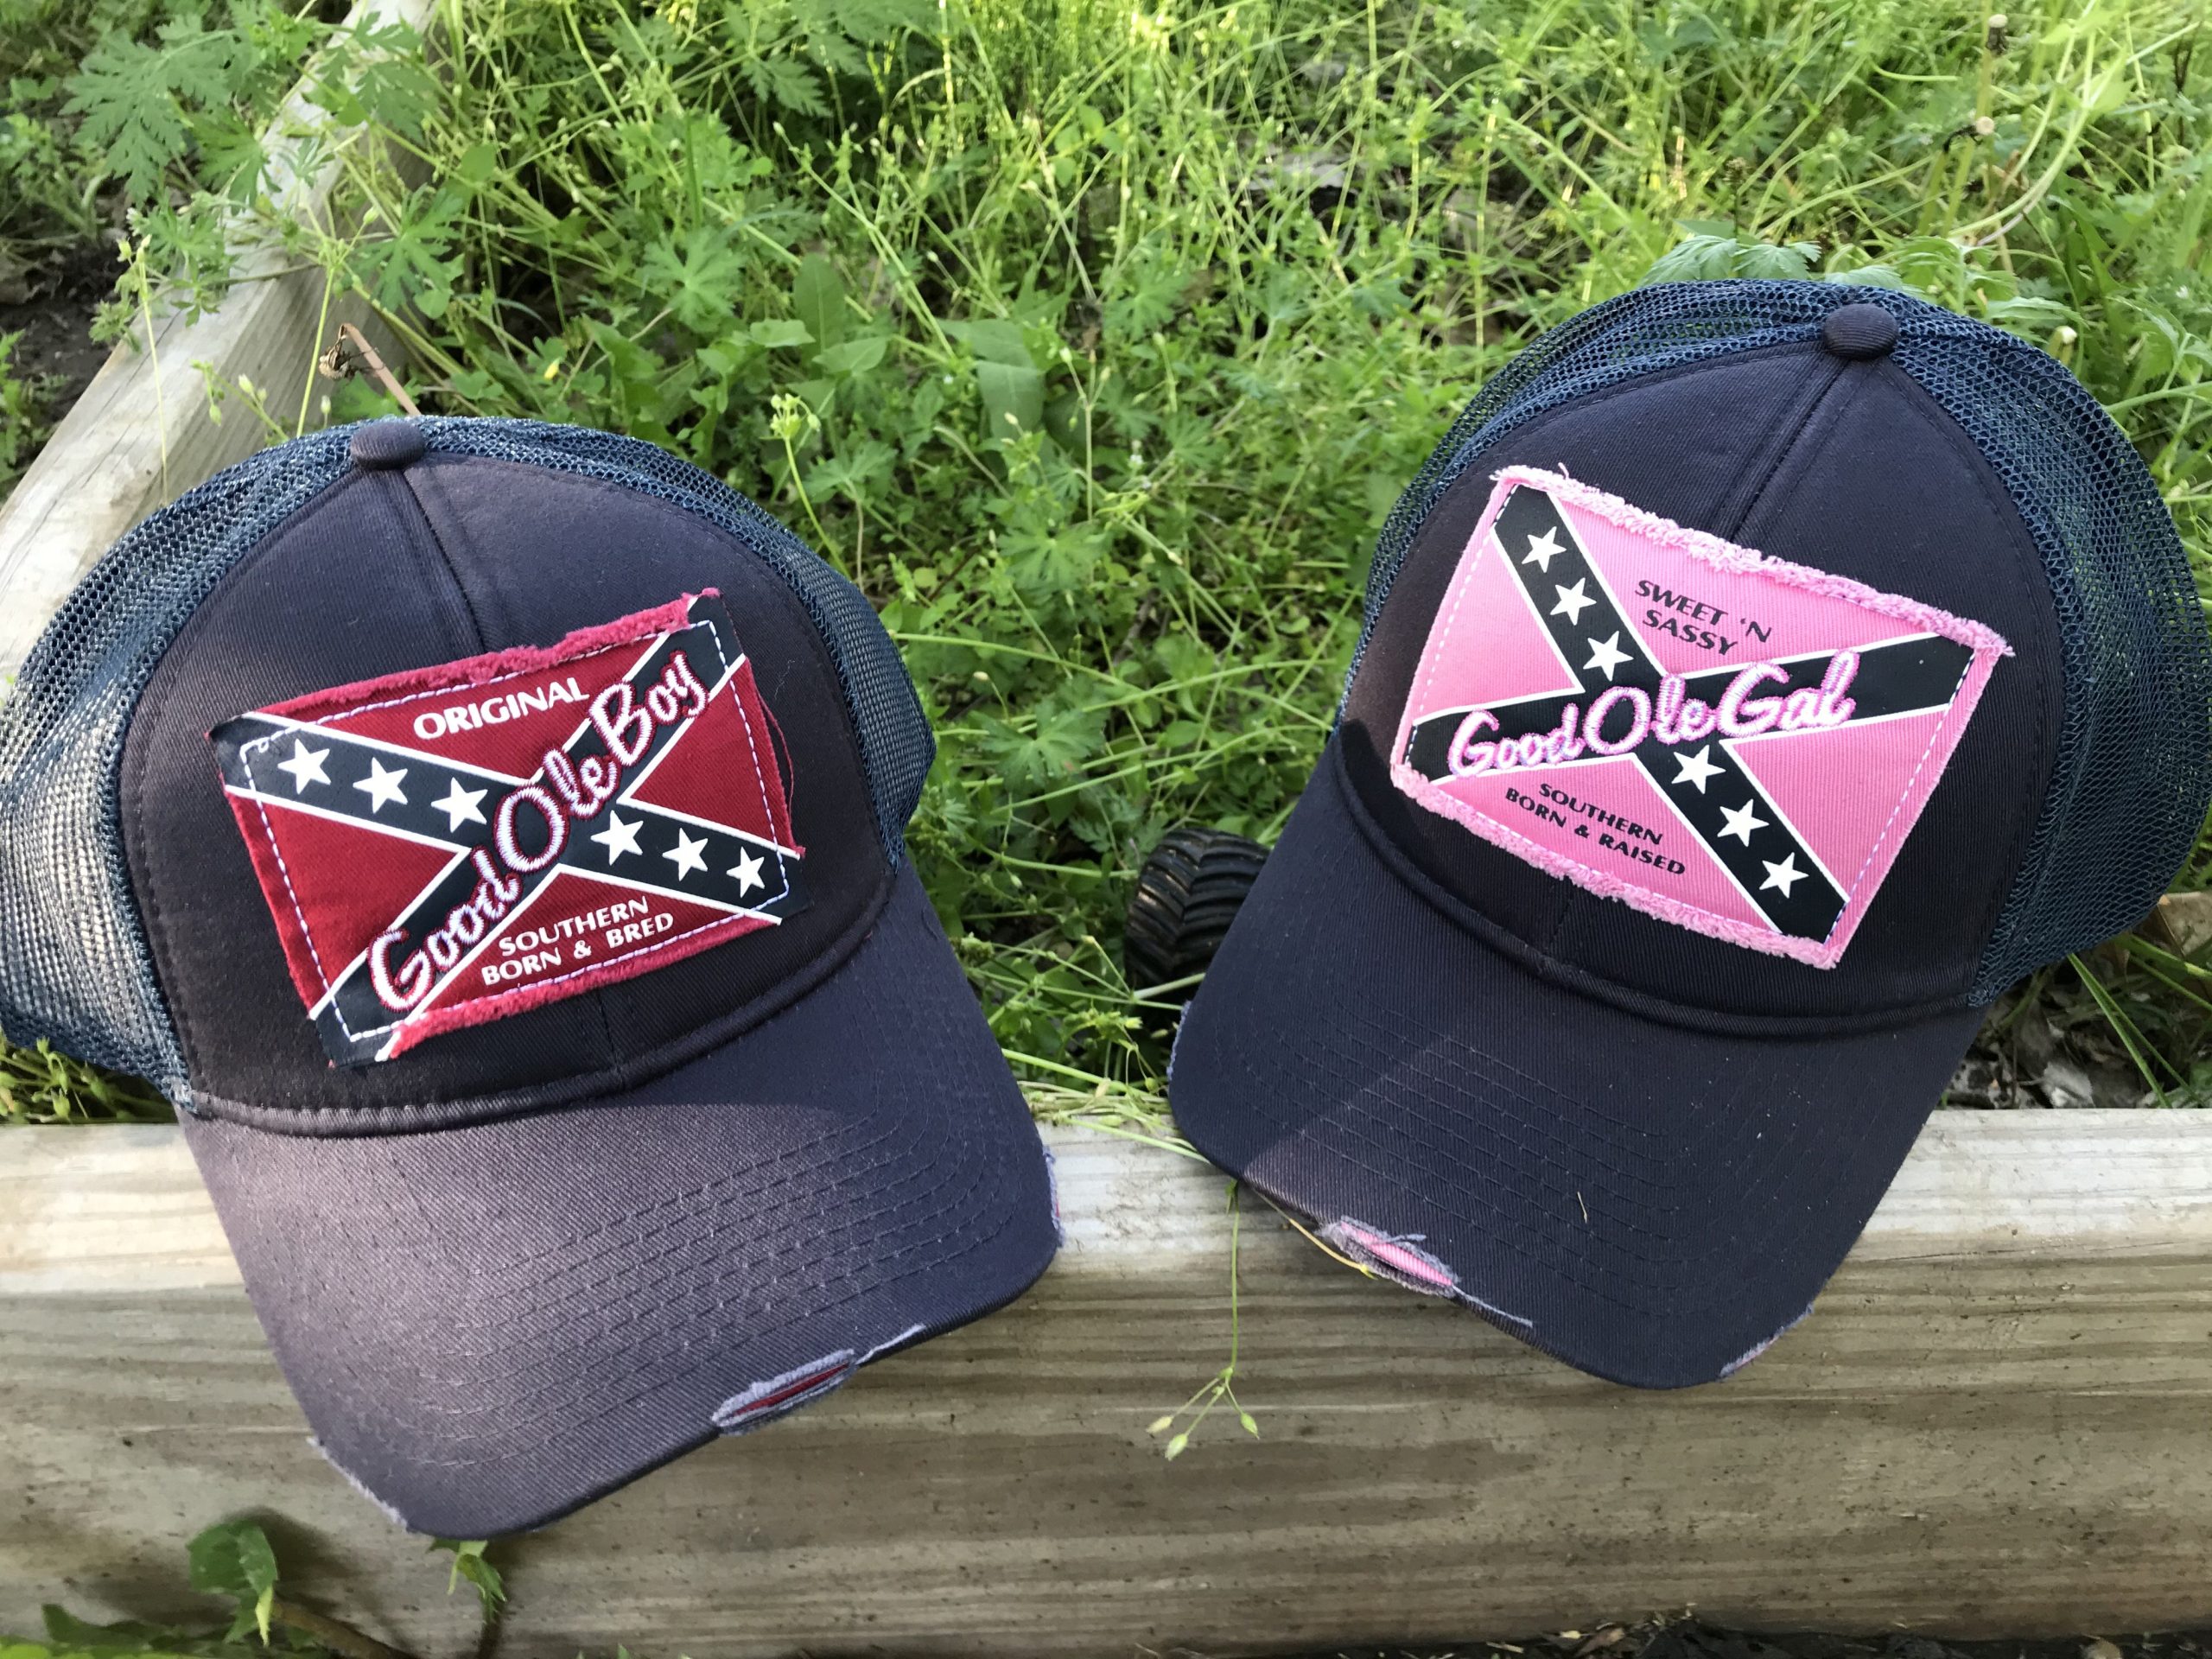 Stylish Confederate Rebel Hat at a super price